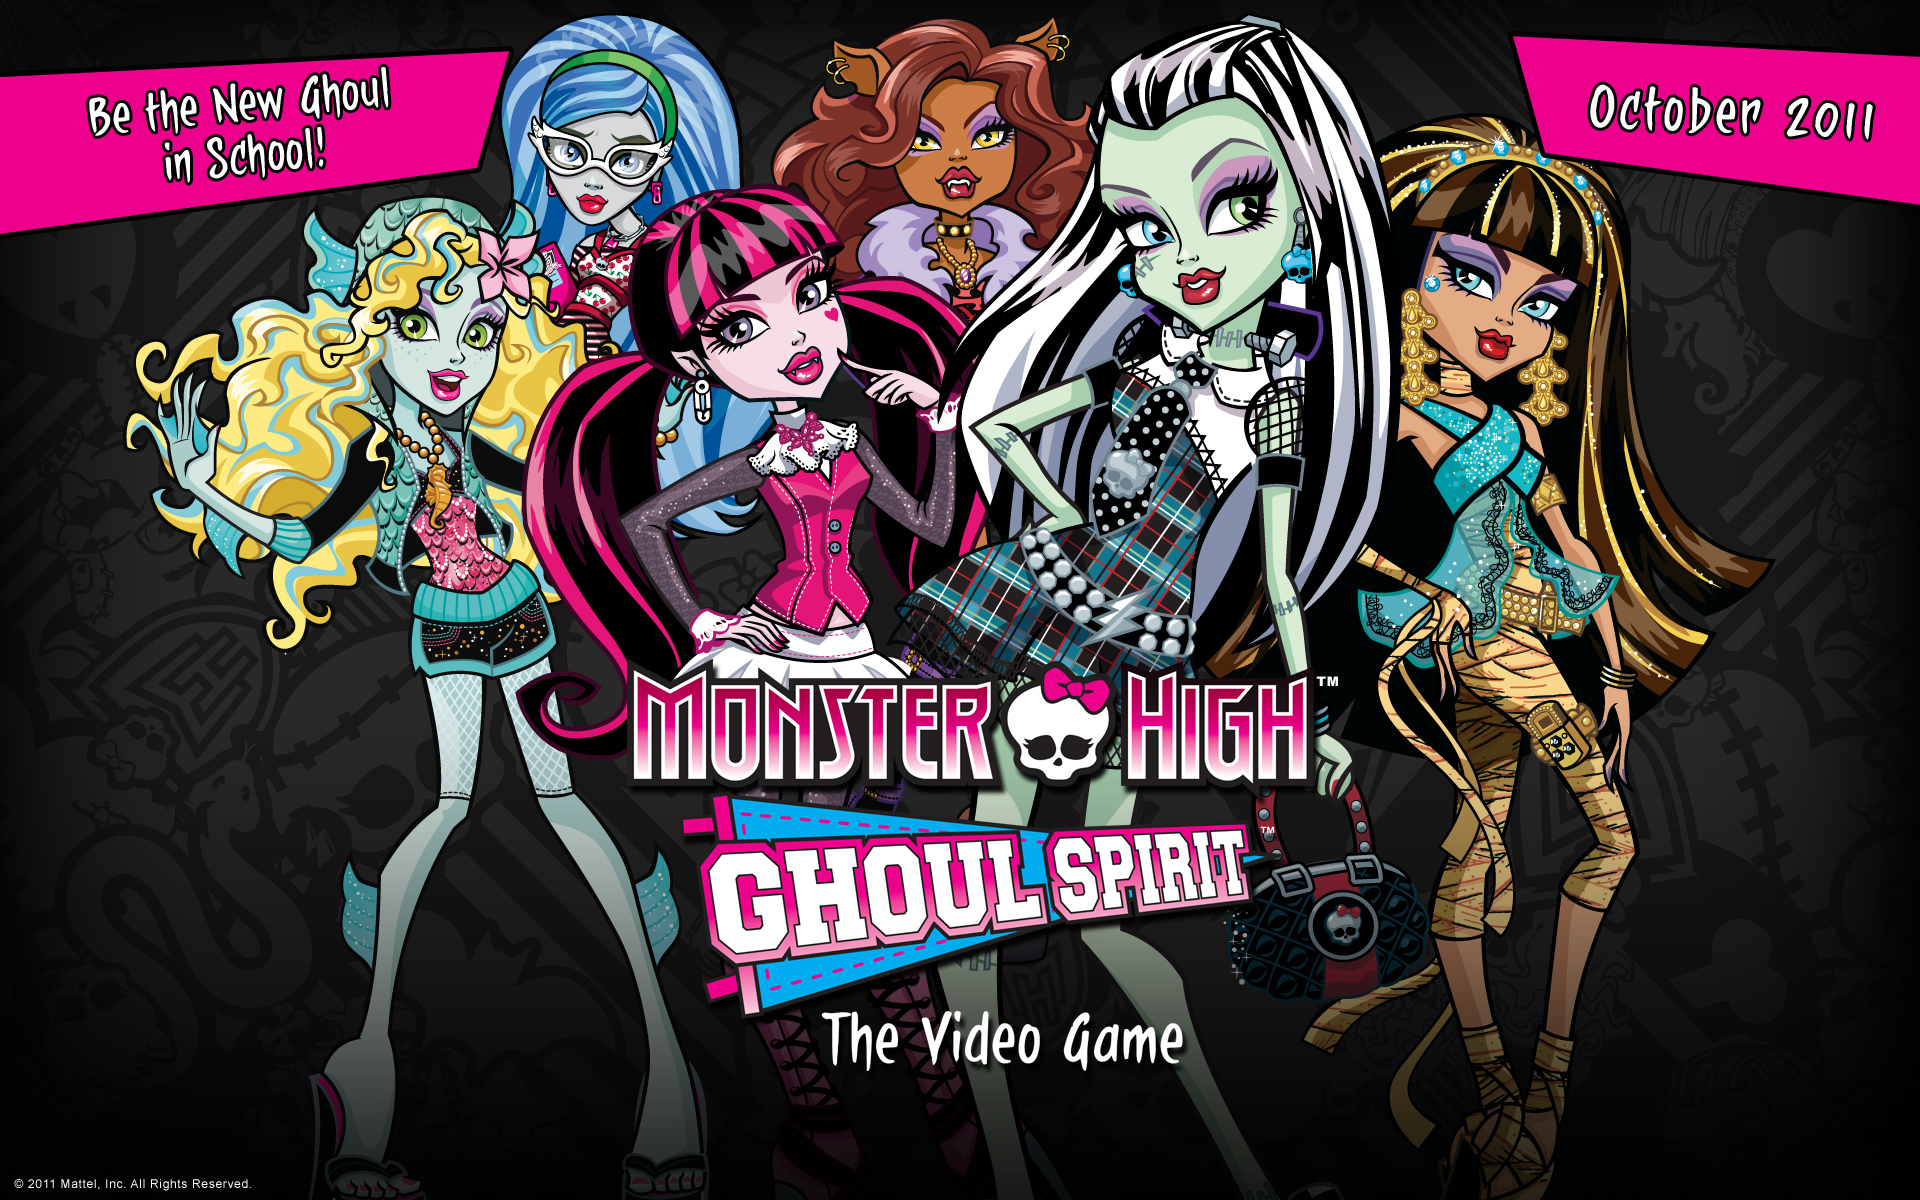 New ghoul school. Школа монстр Хай. Монстер Хай 1 поколение. Monster High: Ghoul Spirit куклы. Школа монстров 2010.